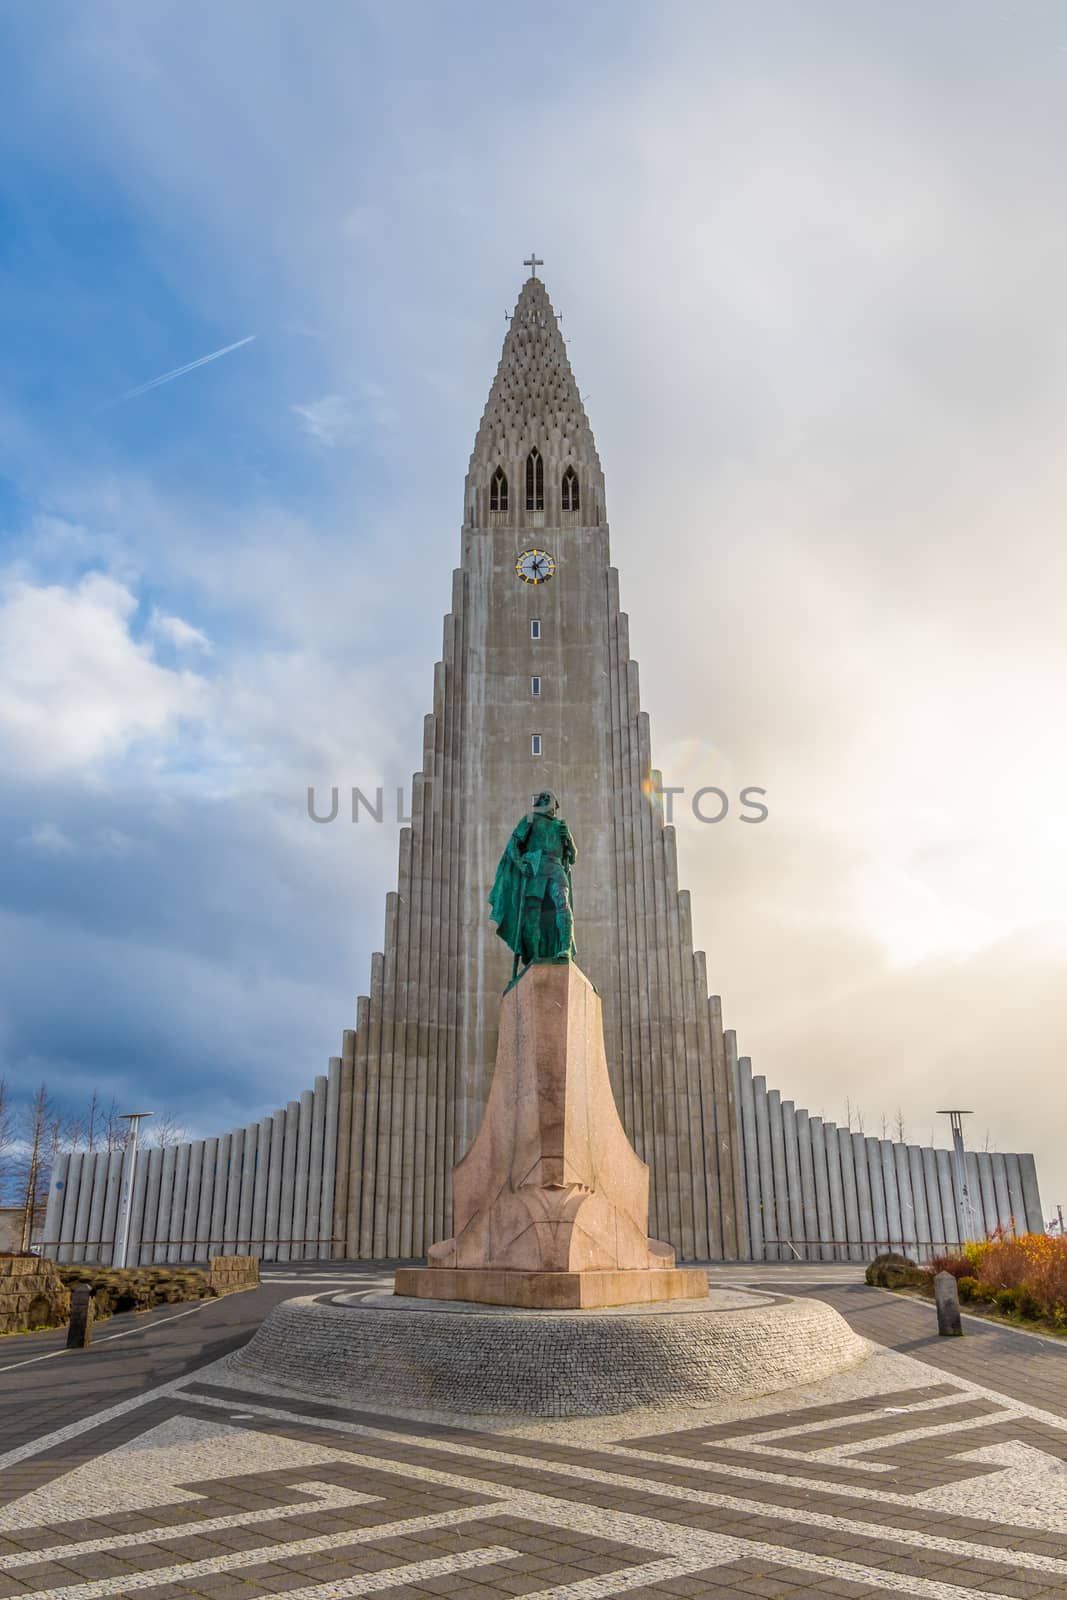 Reykjavik in Iceland Hilgrimskirkja Hilgims church during beautiful sunny day